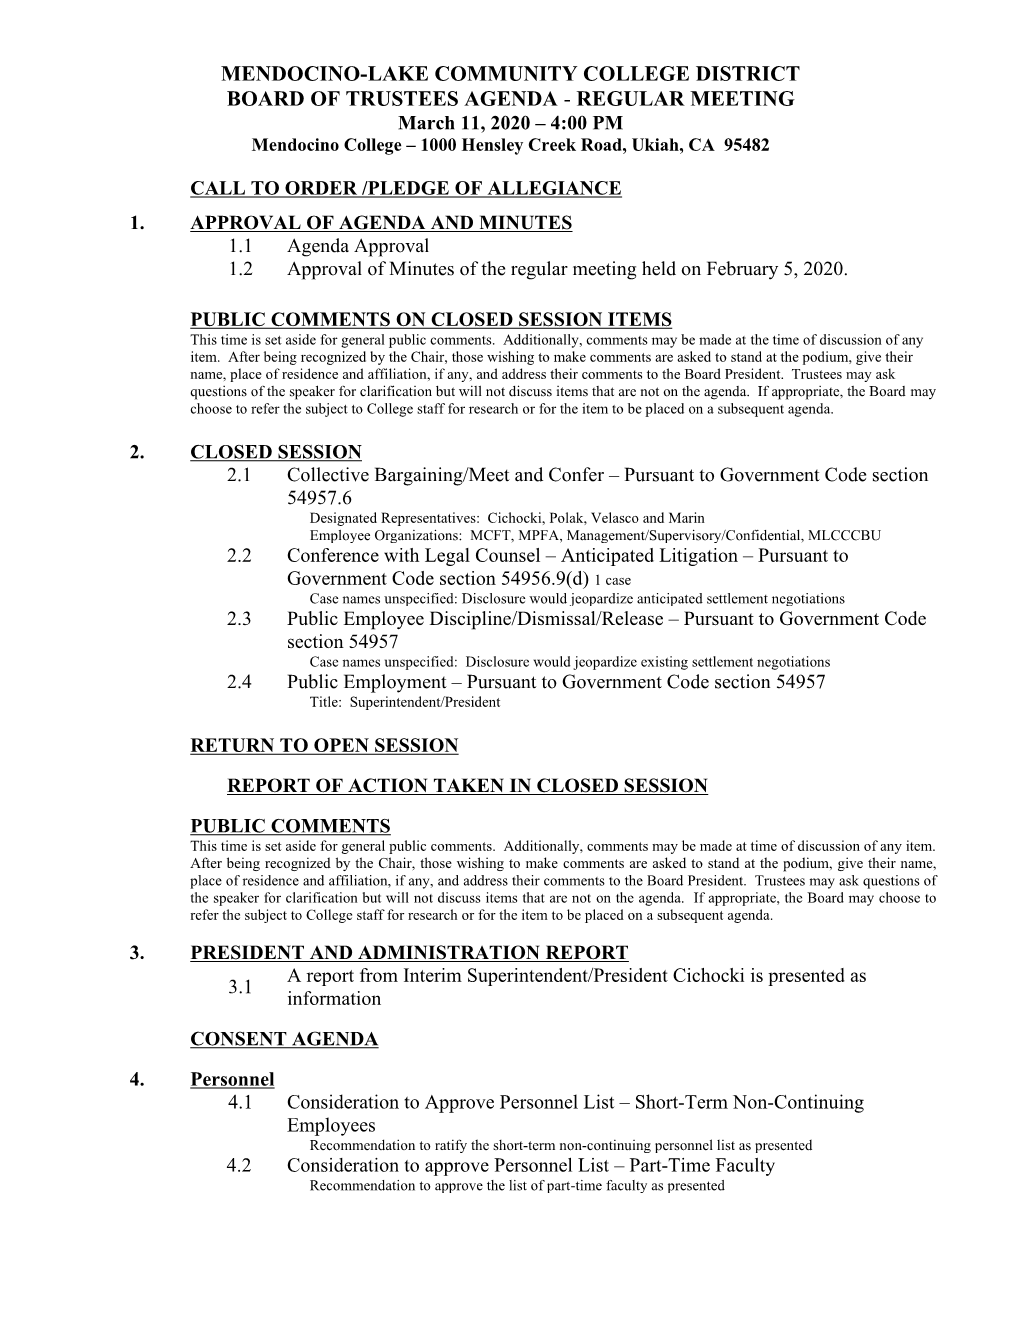 Mendocino-Lake Community College District Board of Trustees Agenda